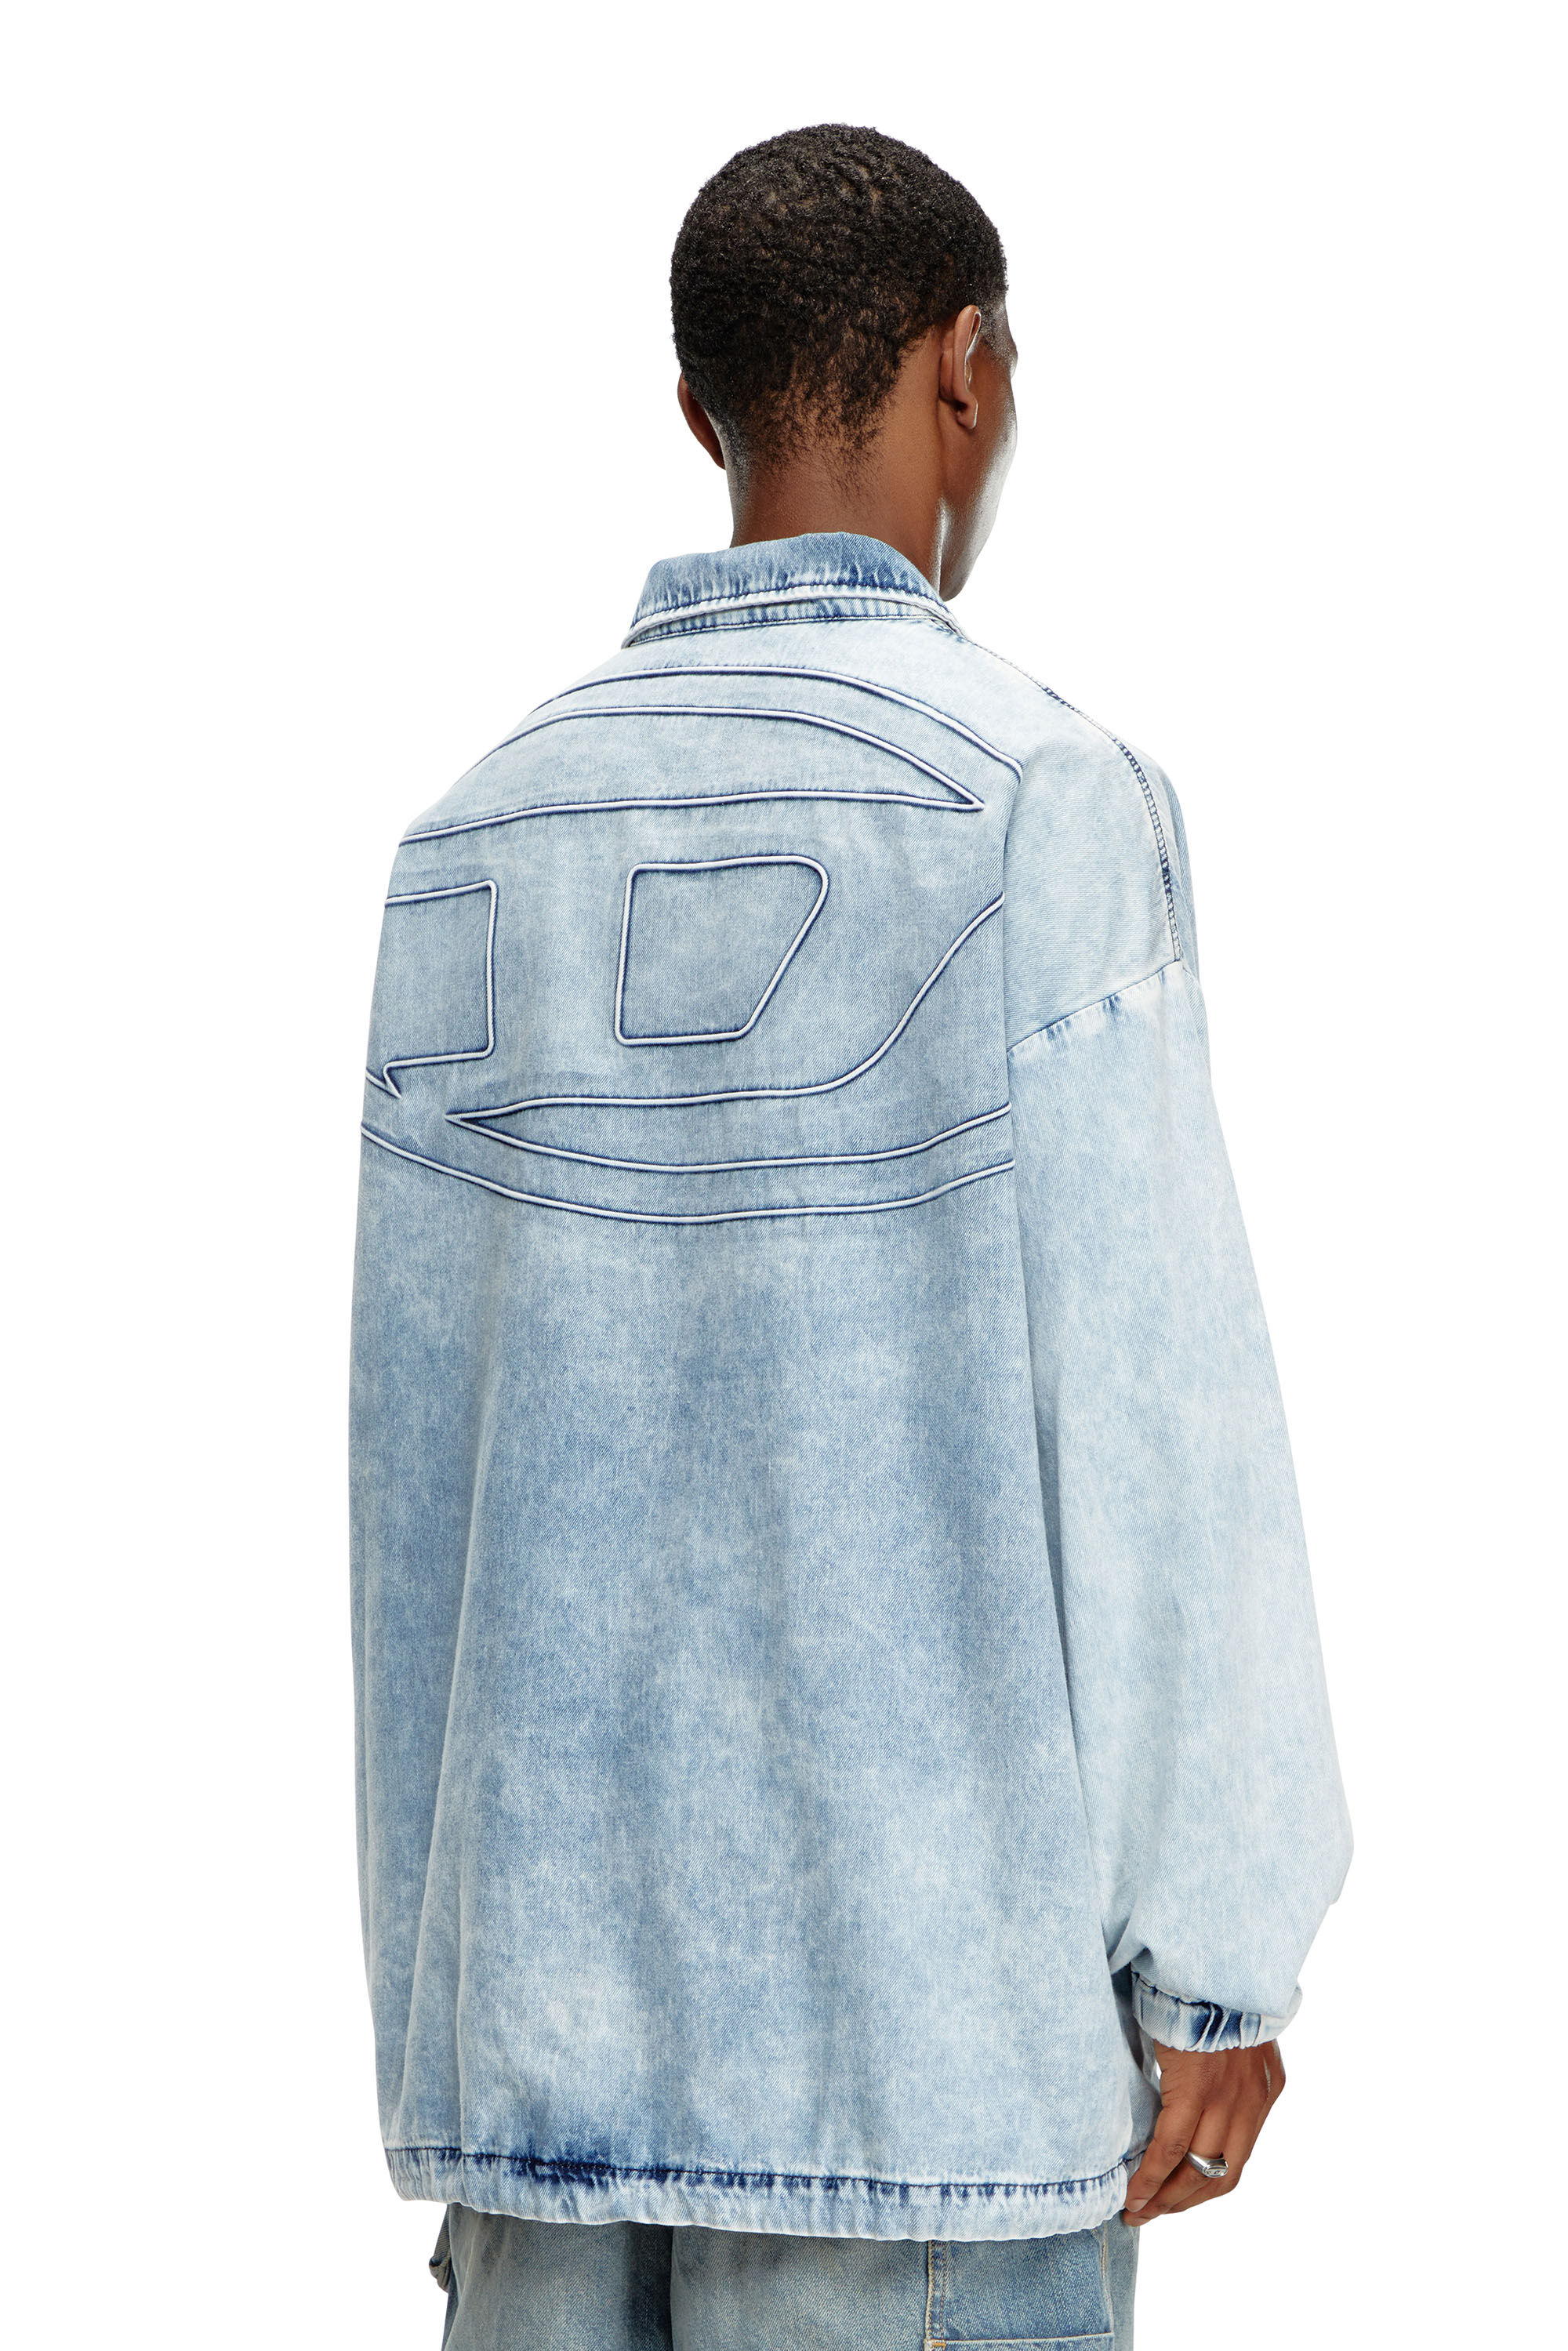 Diesel - D-KRAP-S1, Male Denim jacket with Oval D in ブルー - Image 3